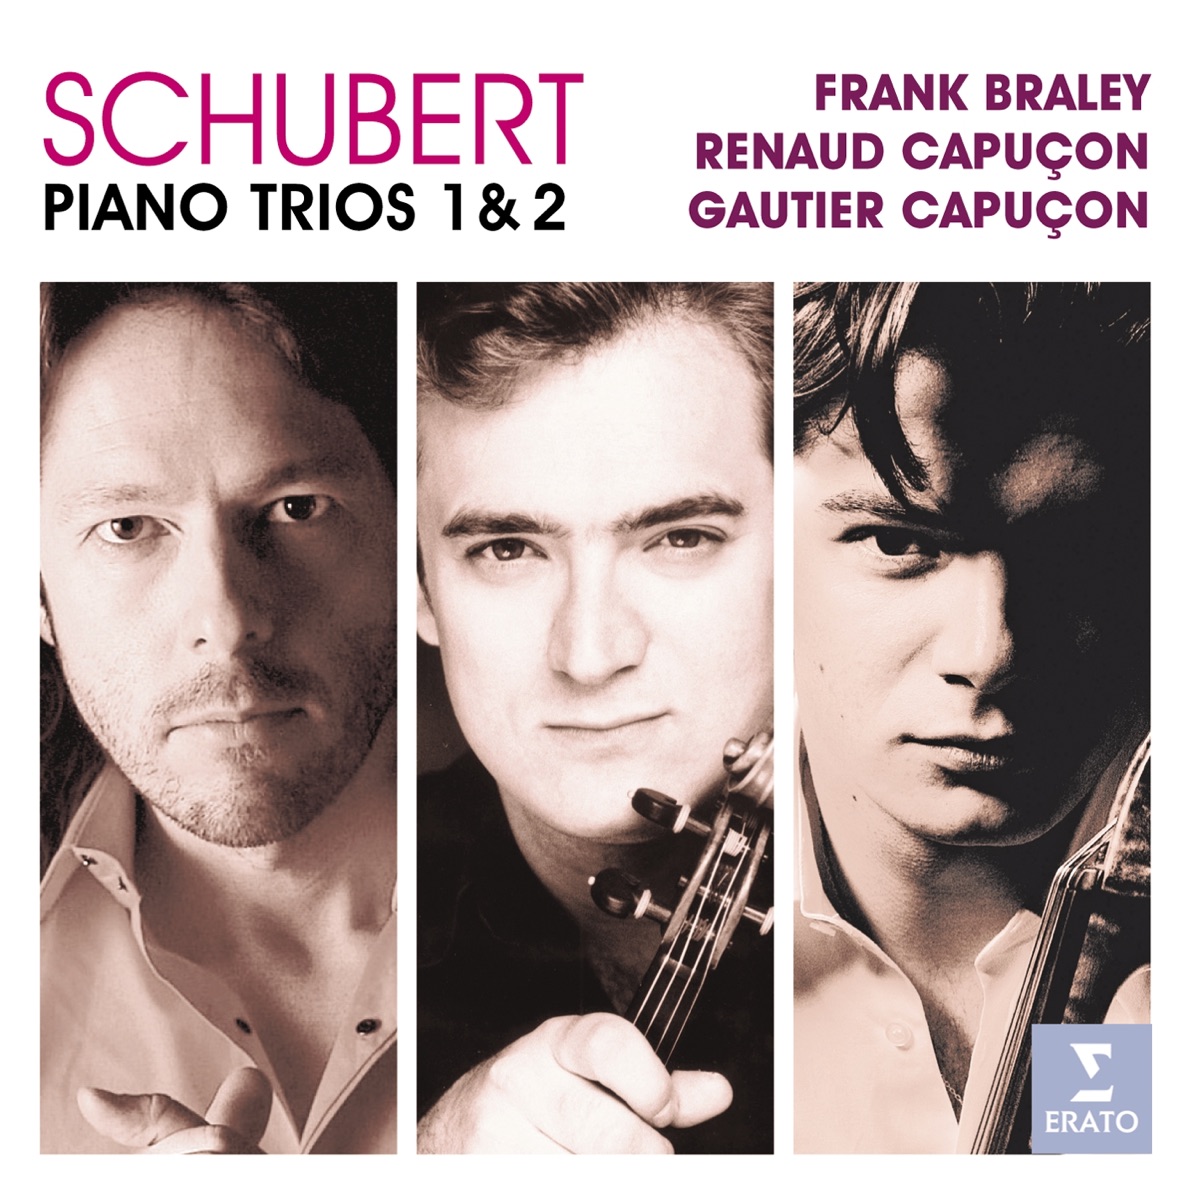 Schubert: Piano Trios par Frank Braley, Gautier Capuçon & Renaud Capuçon  sur Apple Music